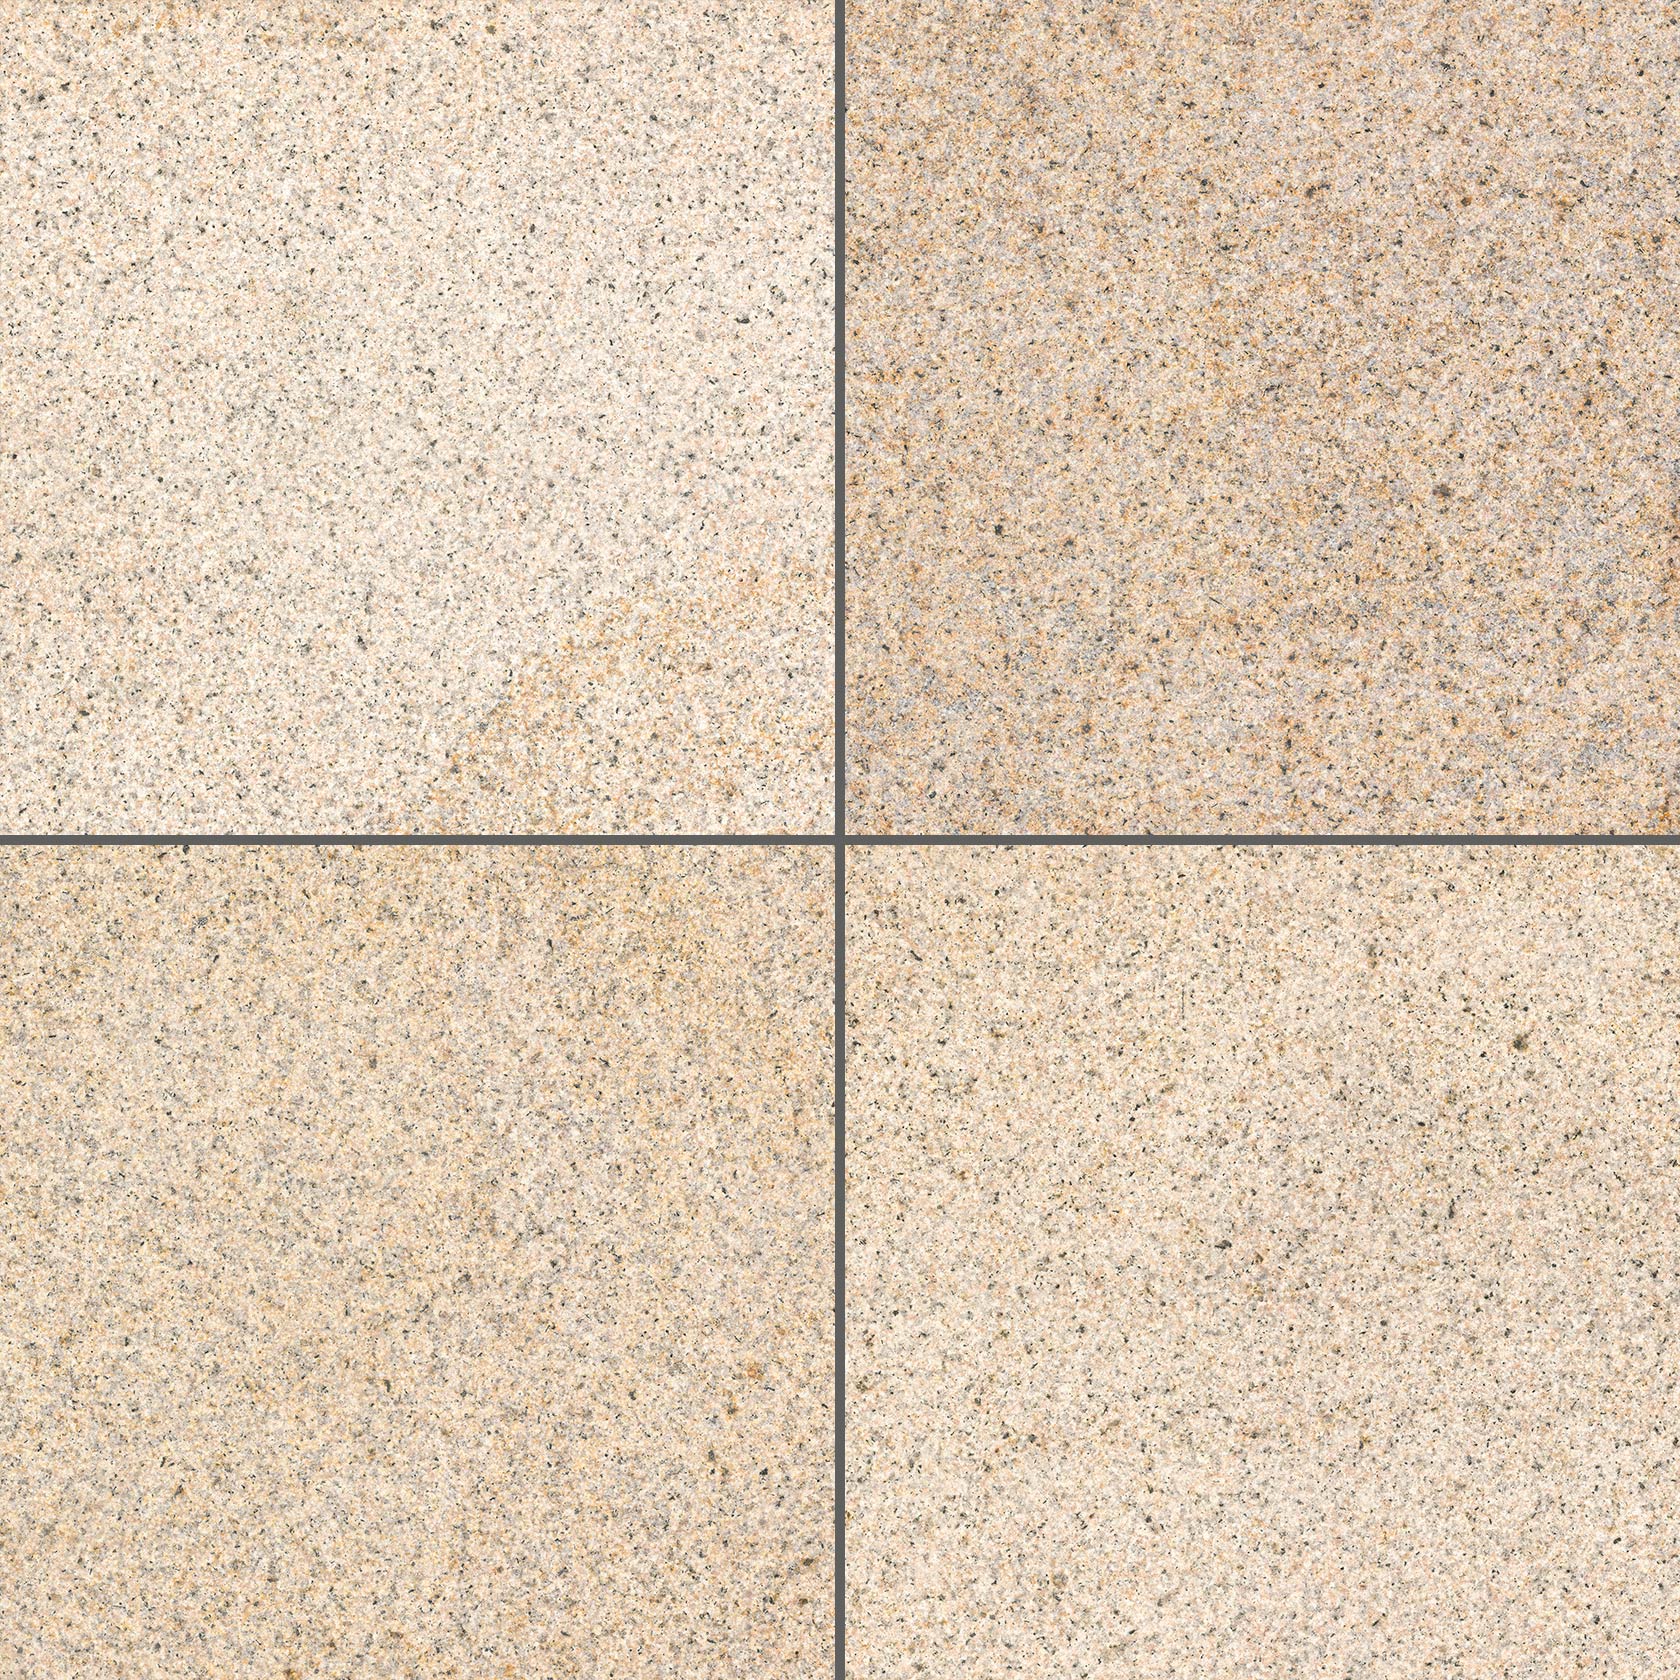 Almond Granite 4 tiles in grid